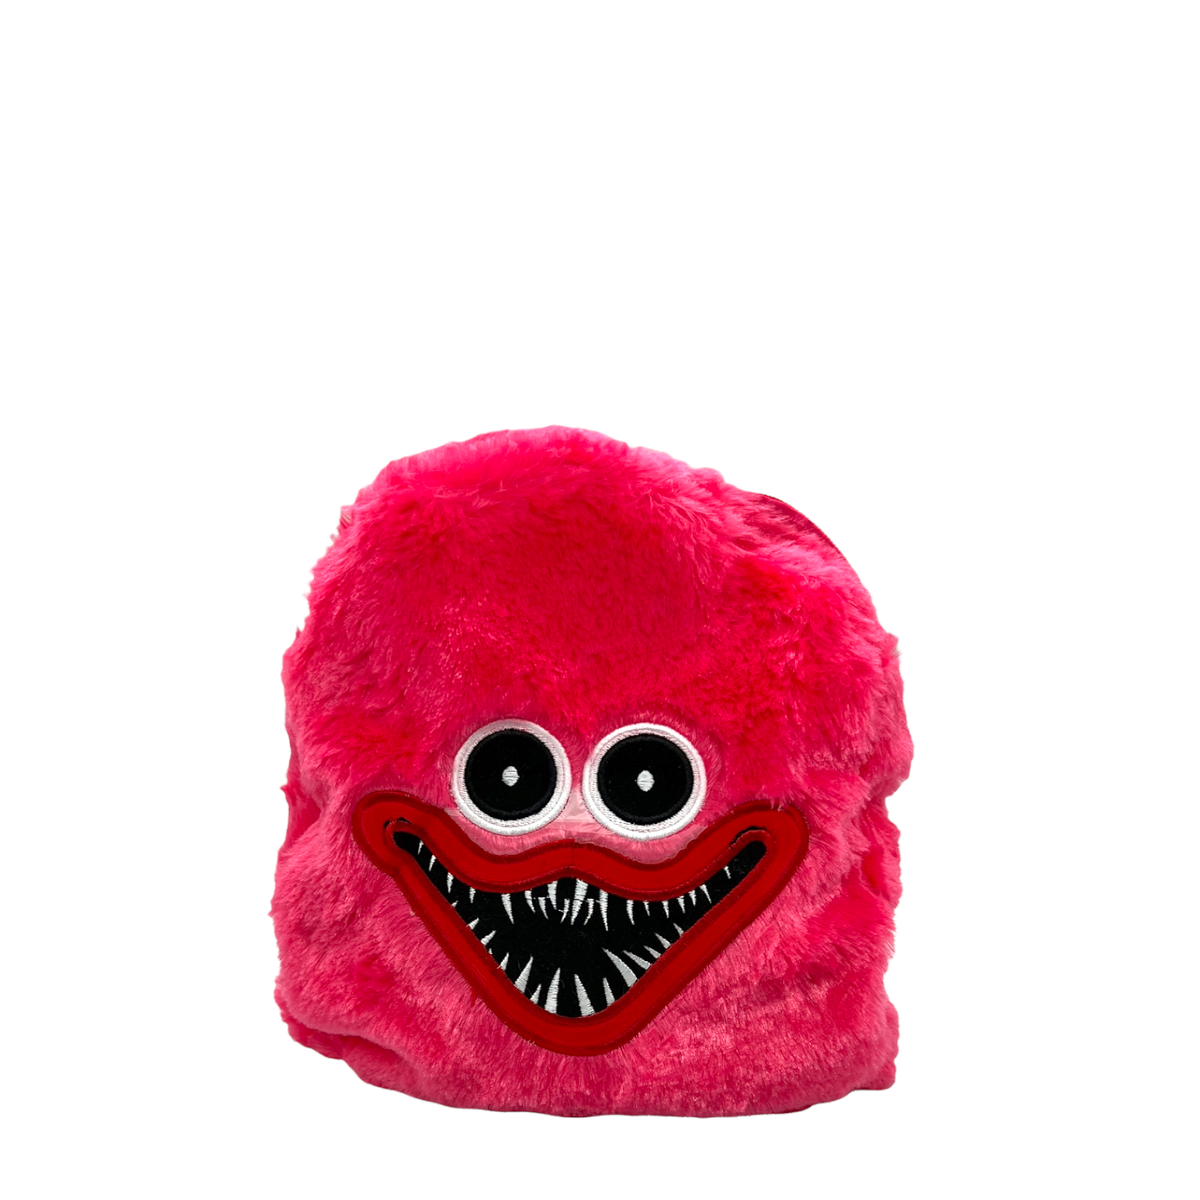 Мягкая игрушка-рюкзак Panawealth International Хагги Вагги Киси Миси розовый - фото 1